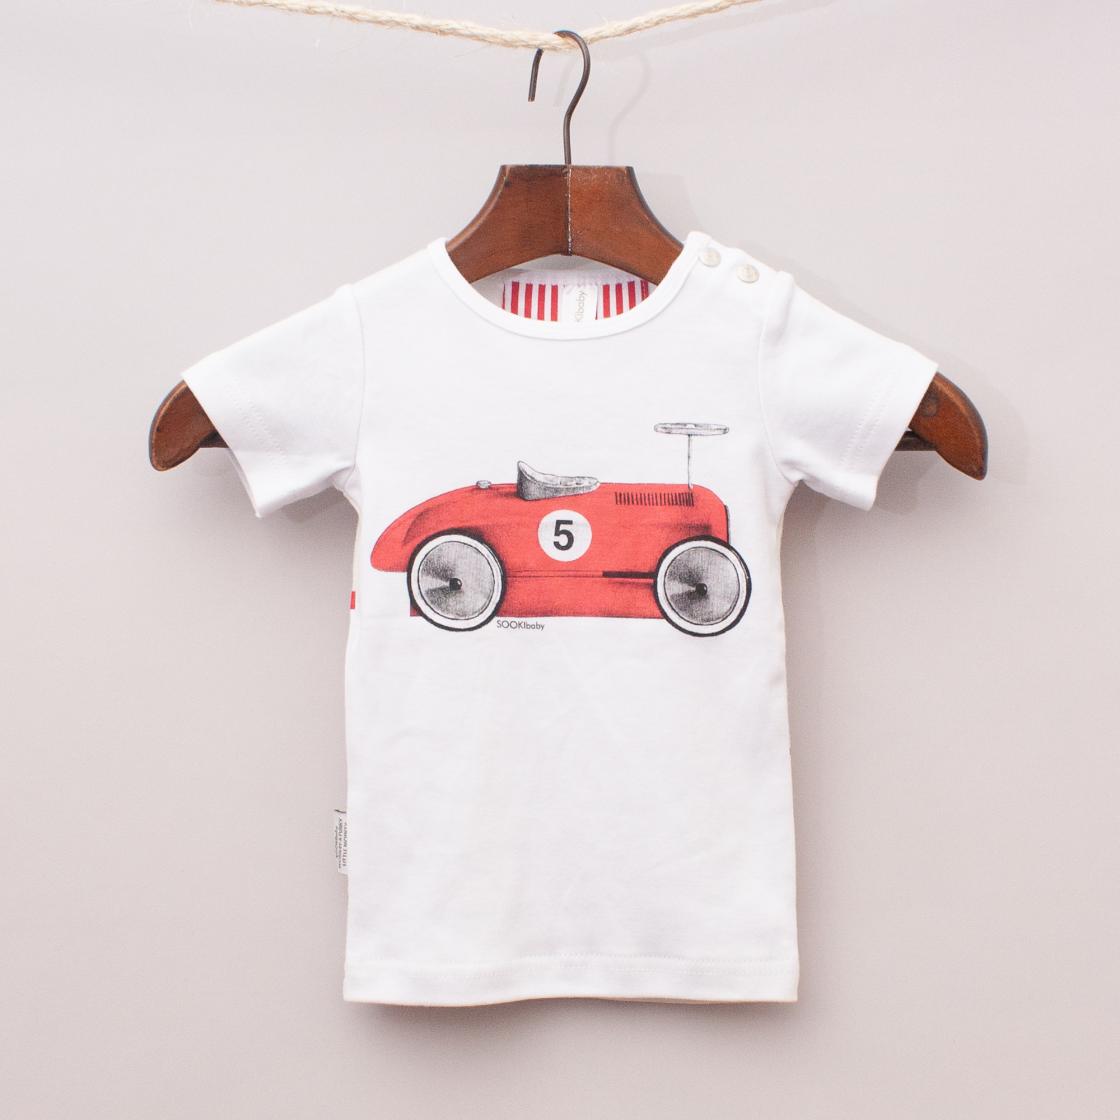 Sooki Baby Race Car T-Shirt "Brand New"